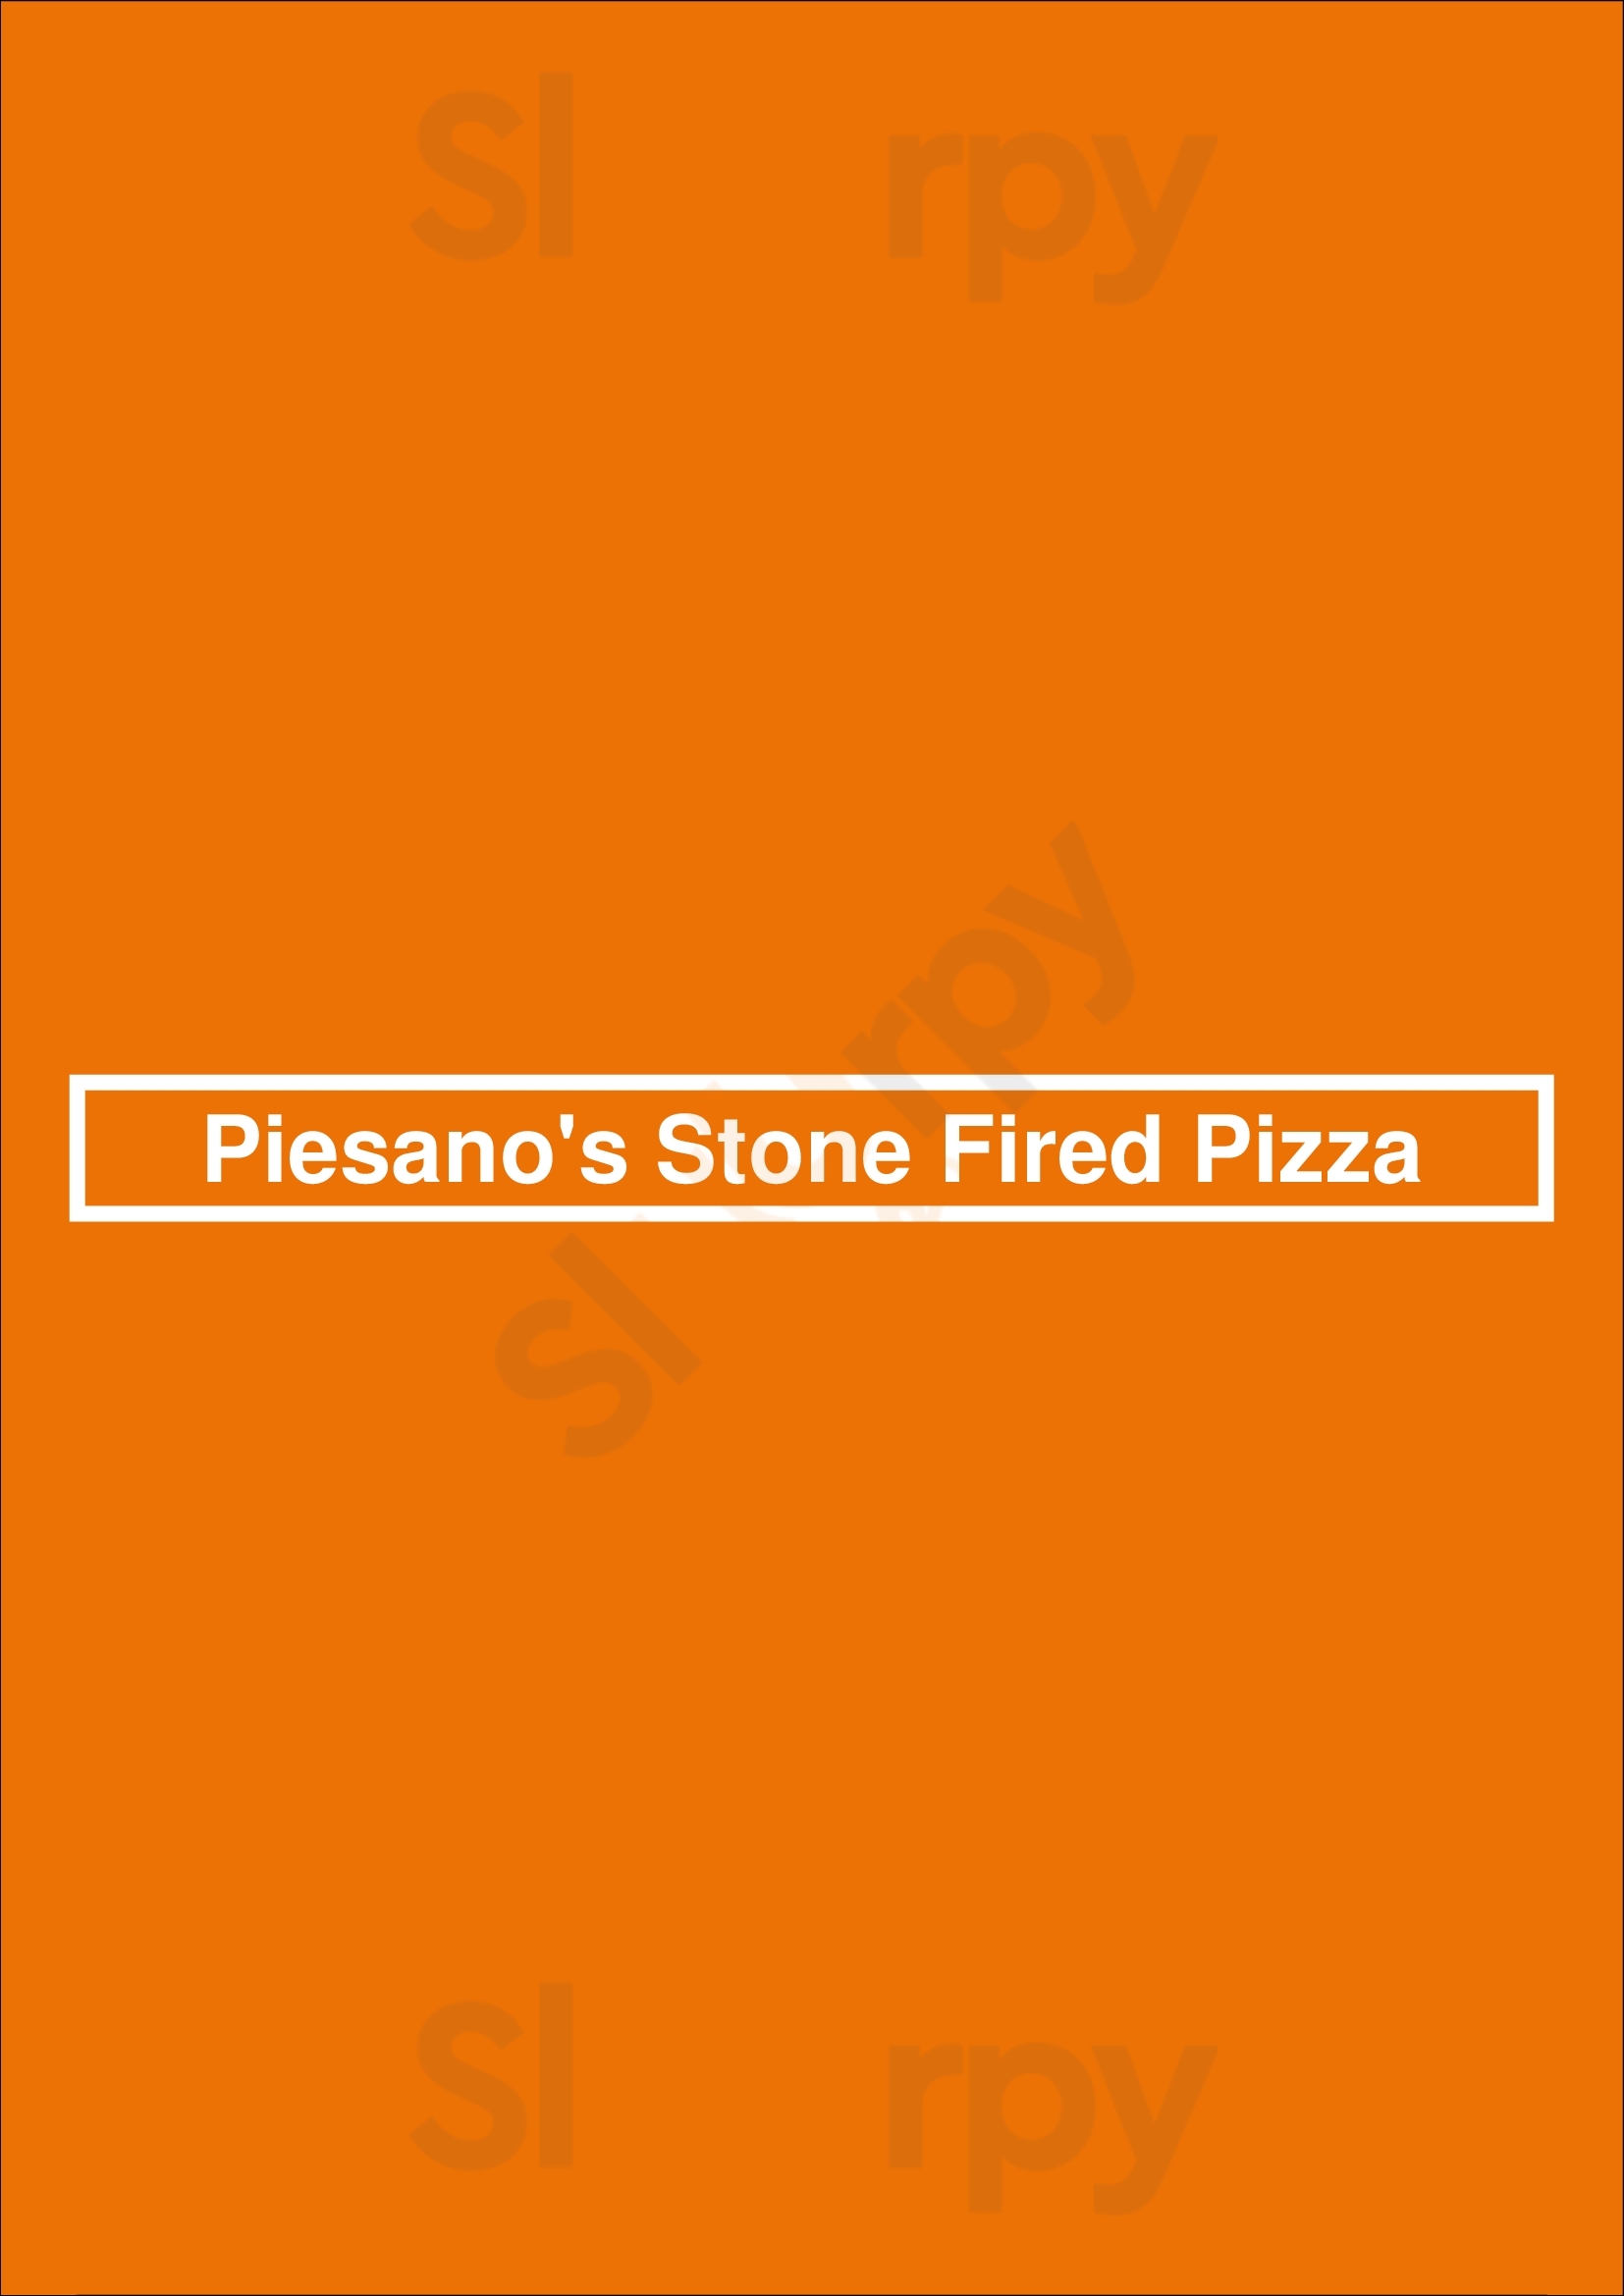 Piesanos Stone Fired Pizza Gainesville Menu - 1